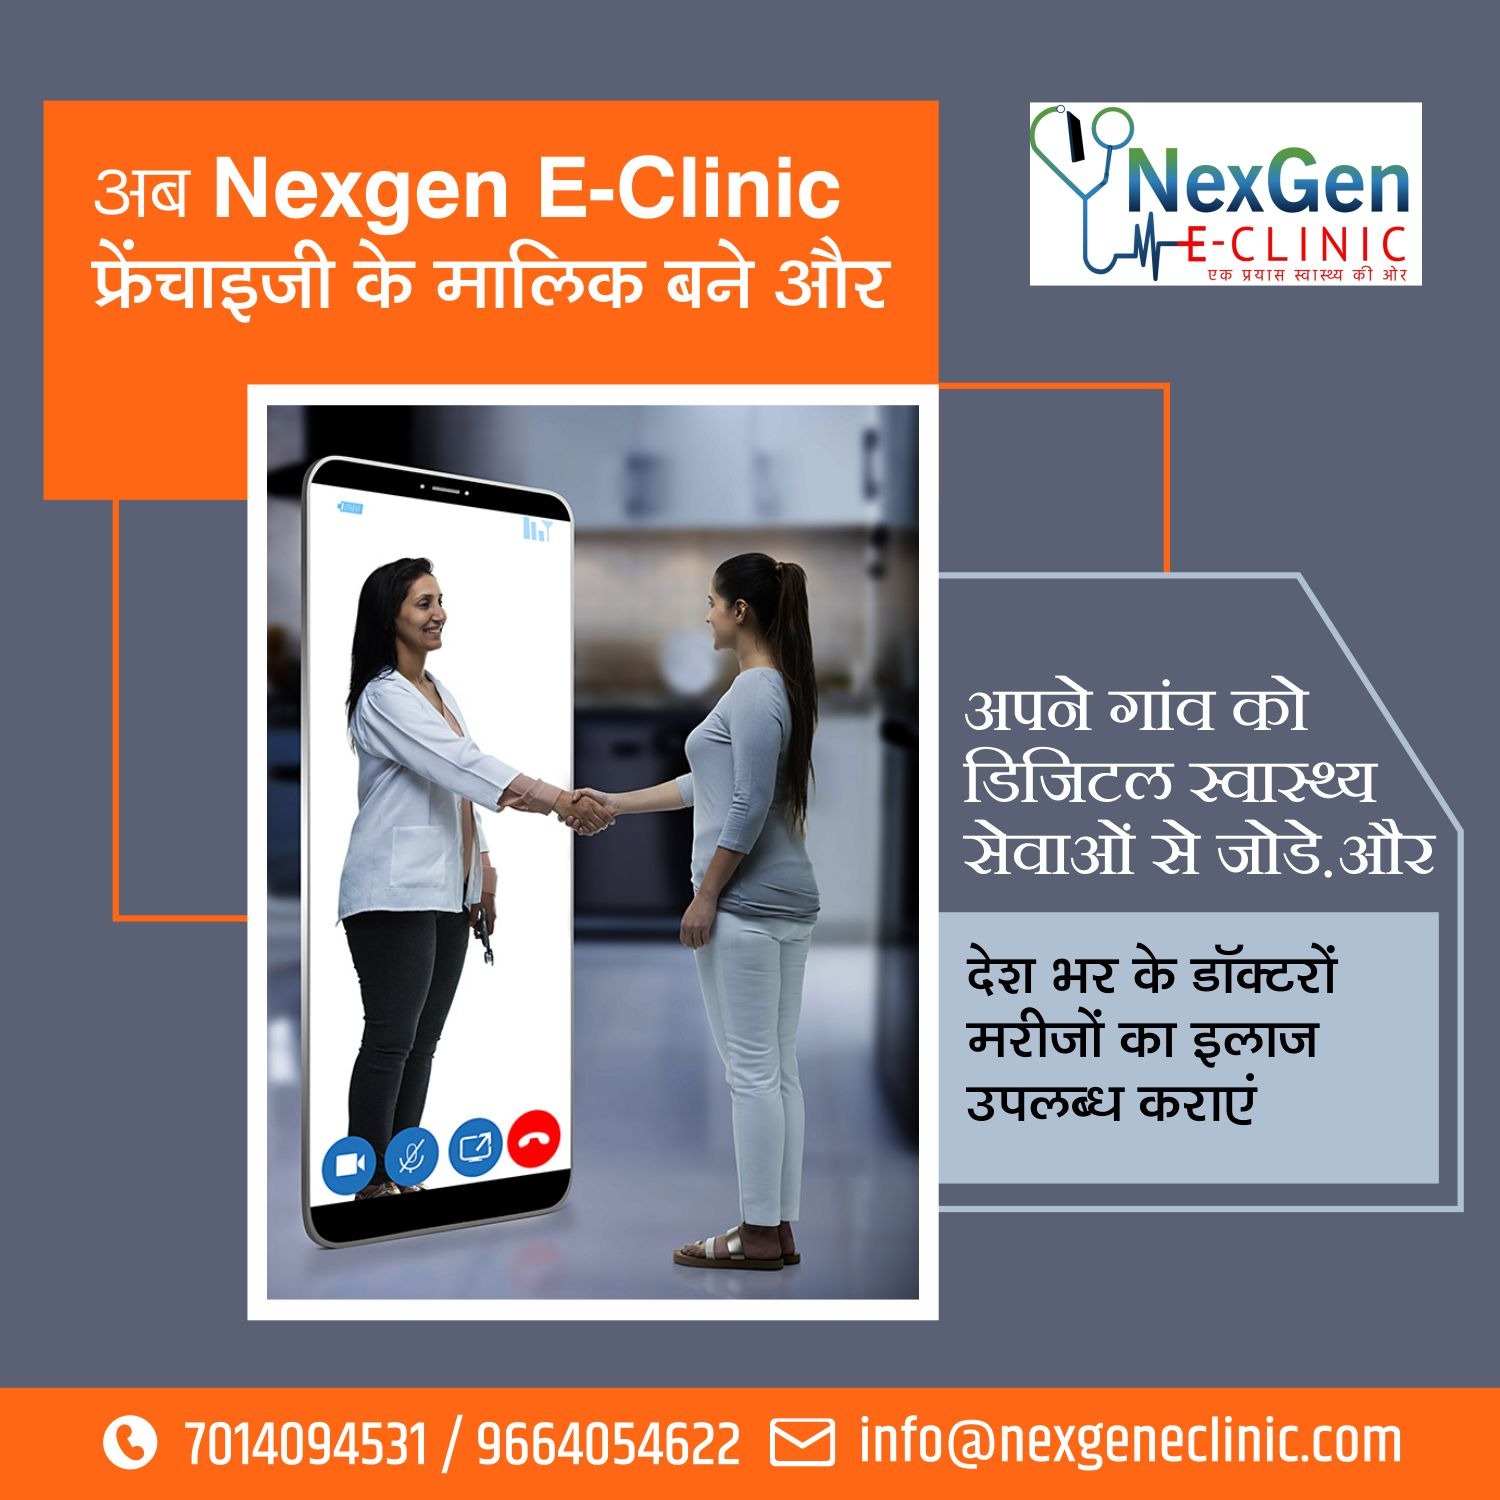 Nexgen e-clinic Image